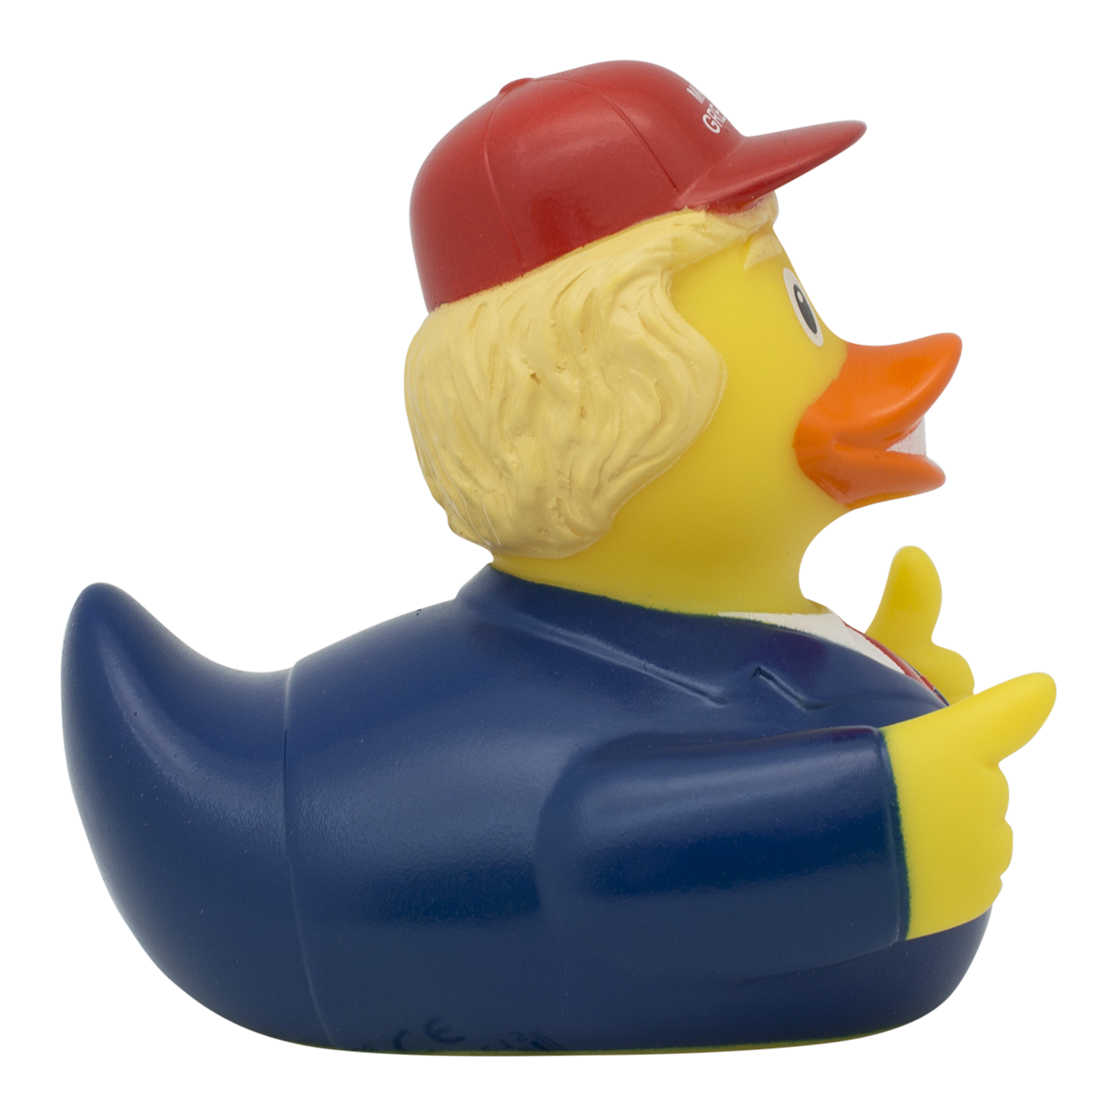 Duck președinte Donald.